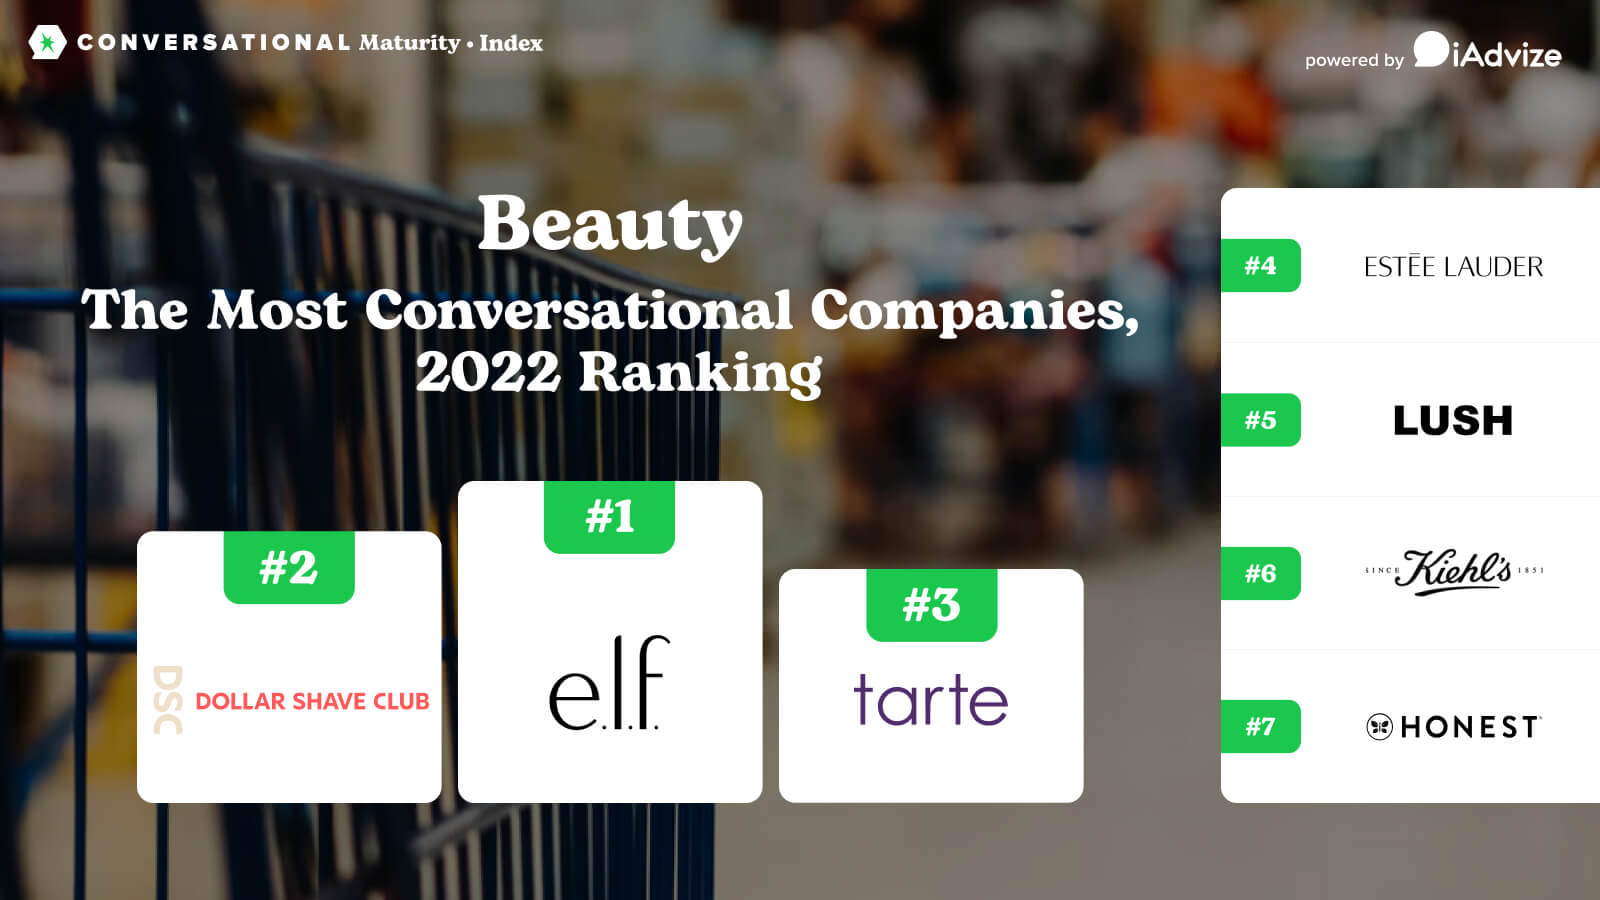 Conversational Maturity Index: Beauty 2022 Ranking